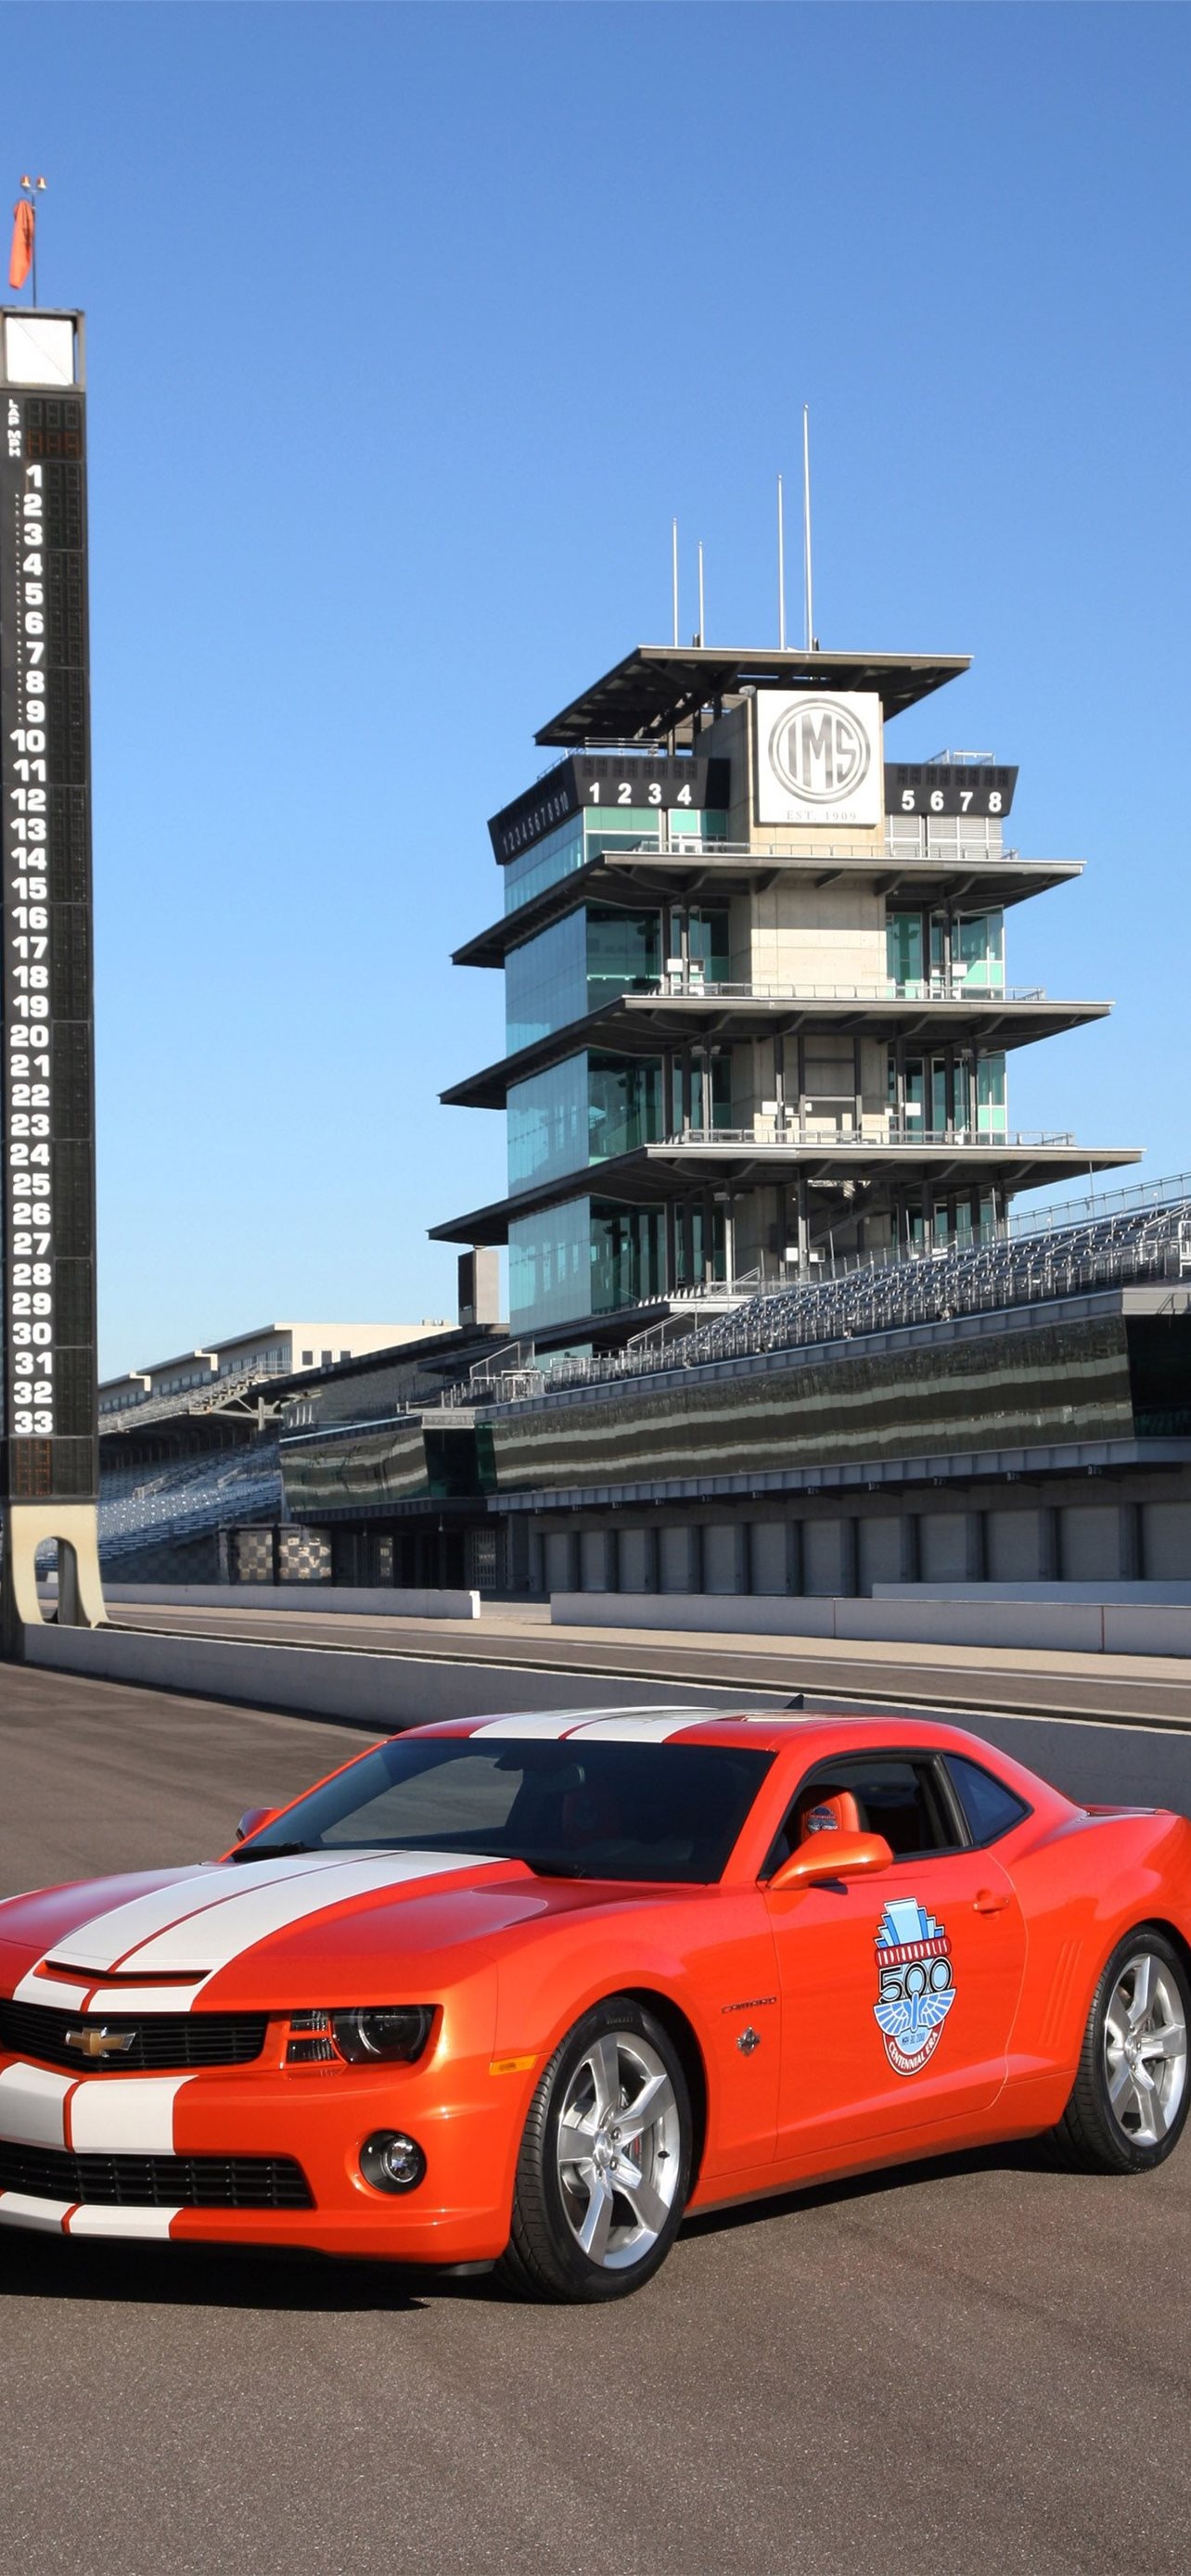 Indianapolis Motor Speedway, iPhone wallpapers, Free download, Motorsport, 1290x2780 HD Handy